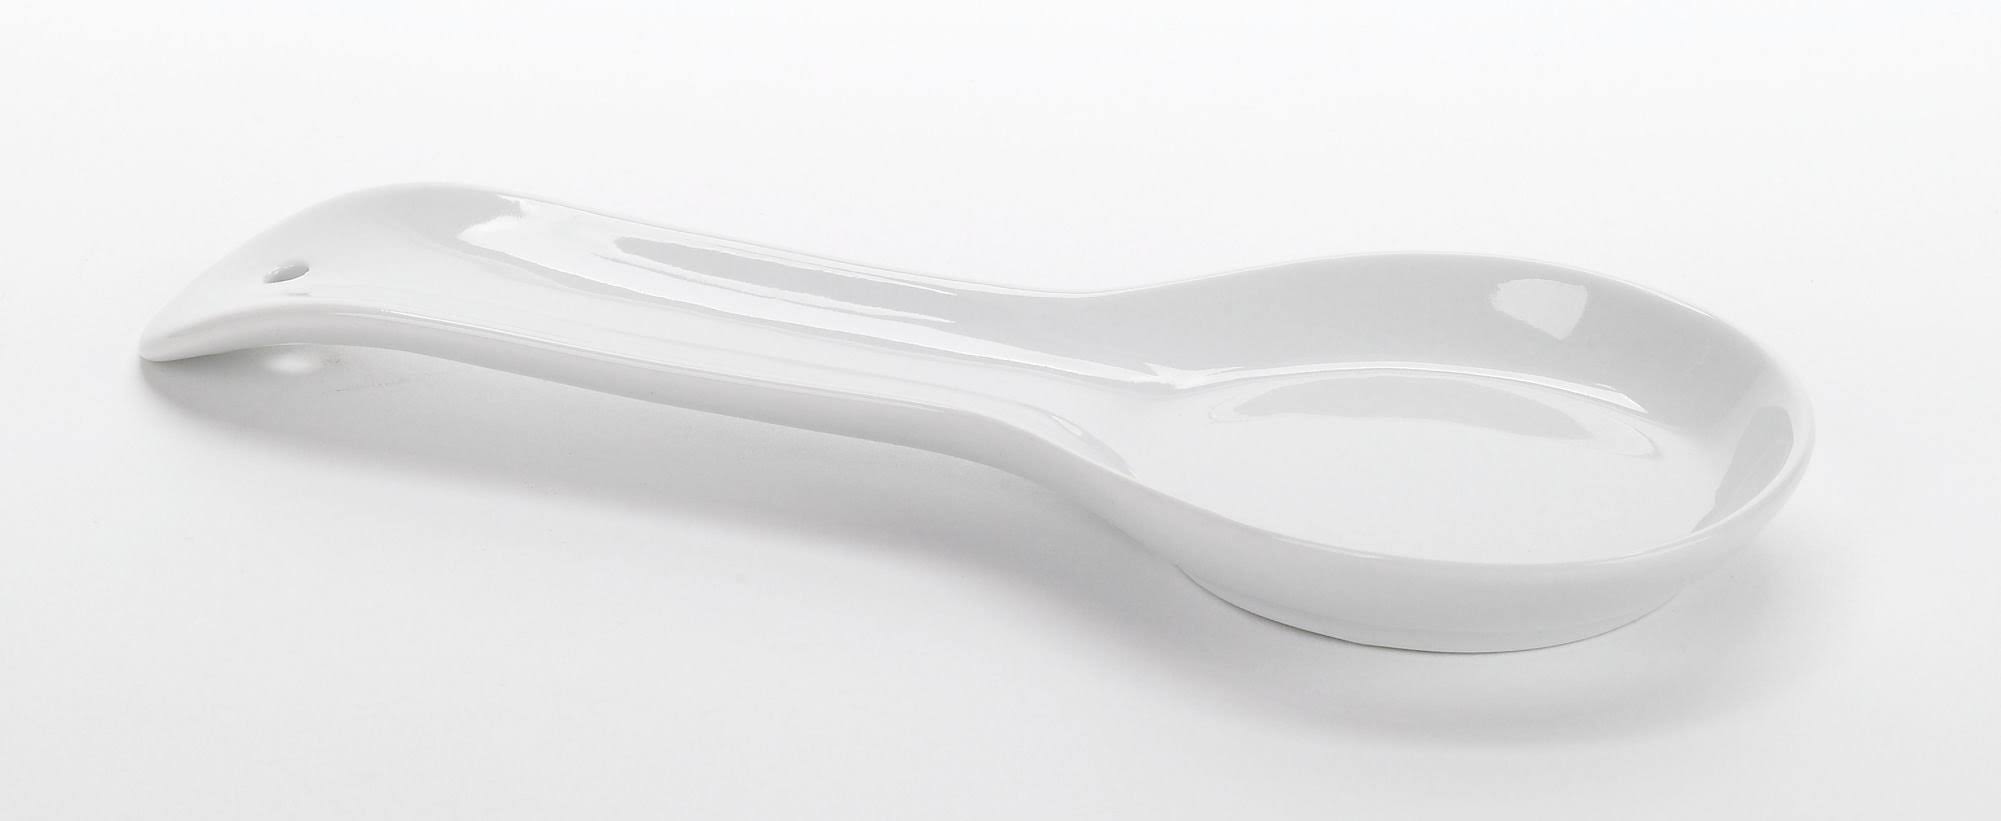 BIA Cordon Bleu White Porcelain 8 inch Curved Spoon Rest